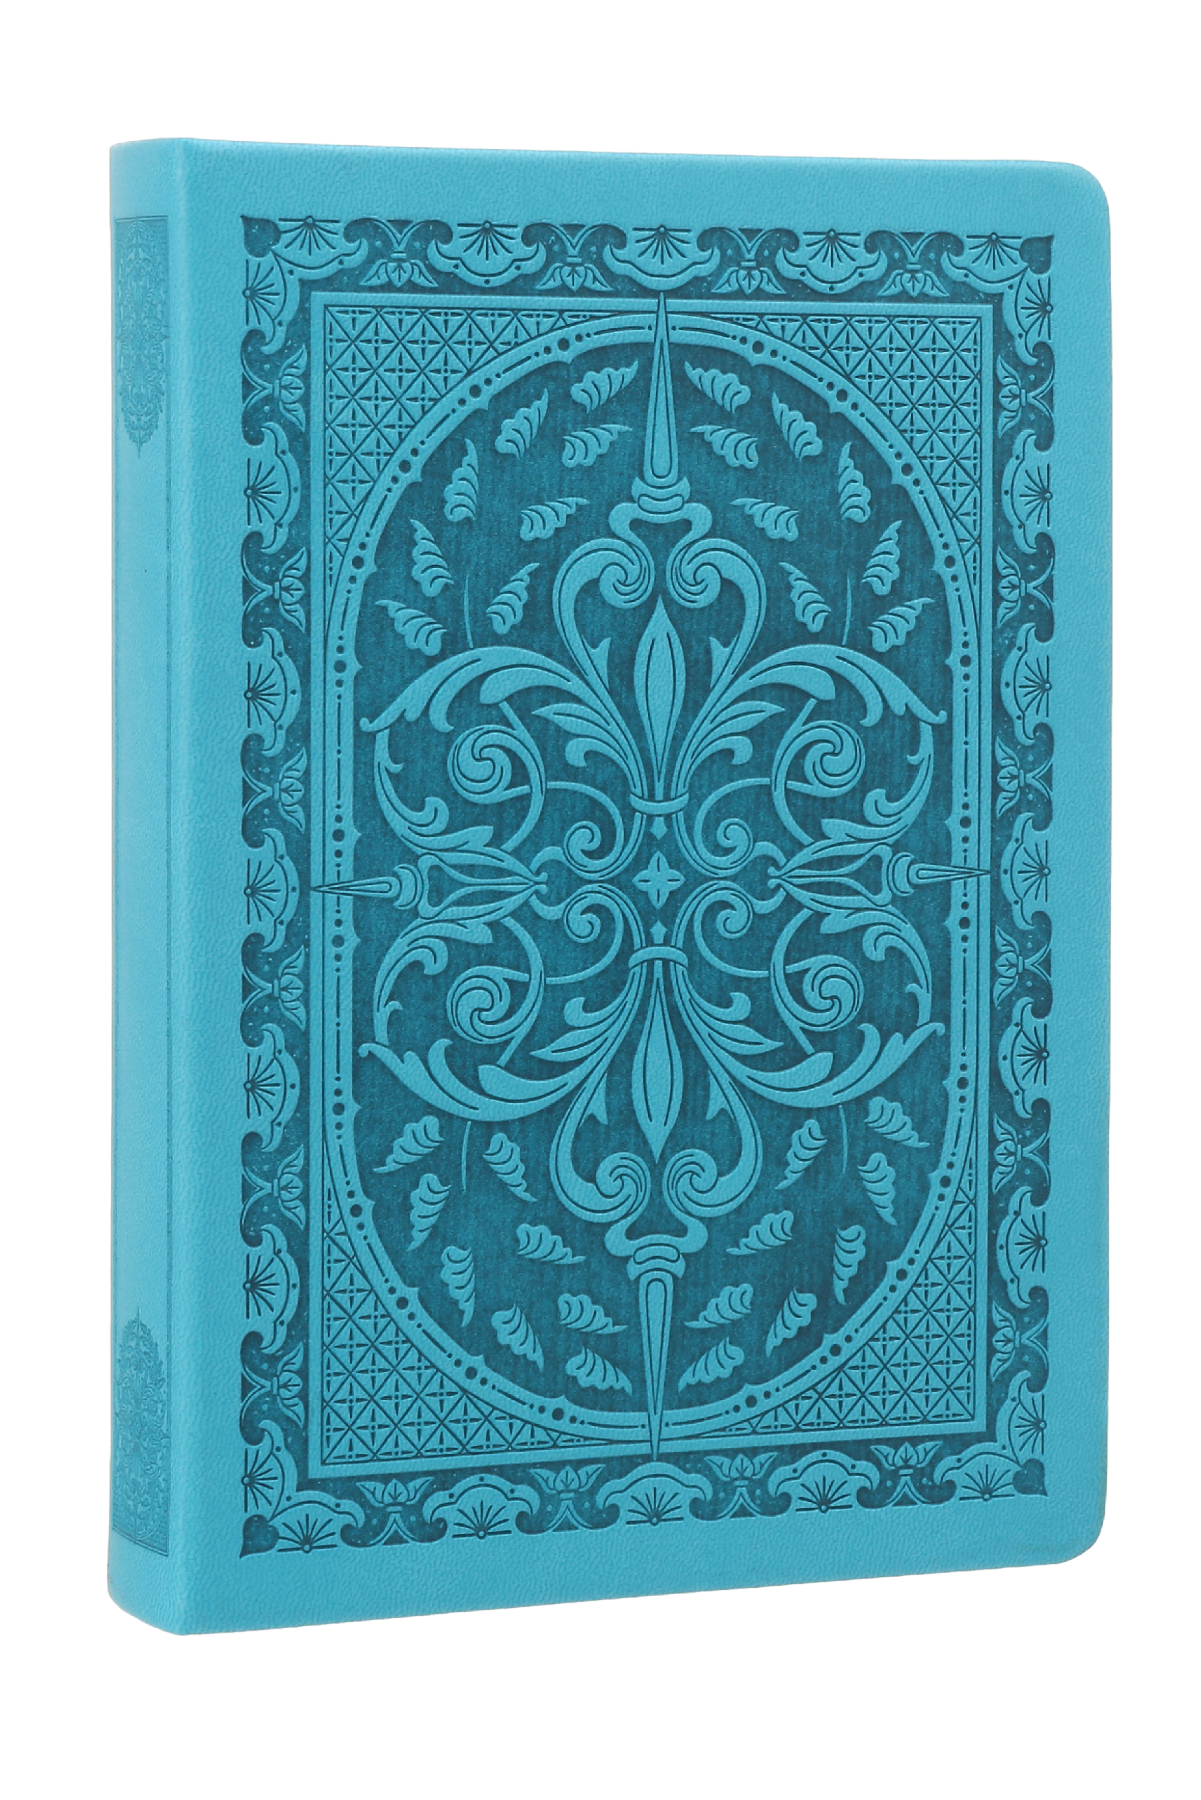 Sketchbook Antique Style Victoria's Journals (Aqua Blue)